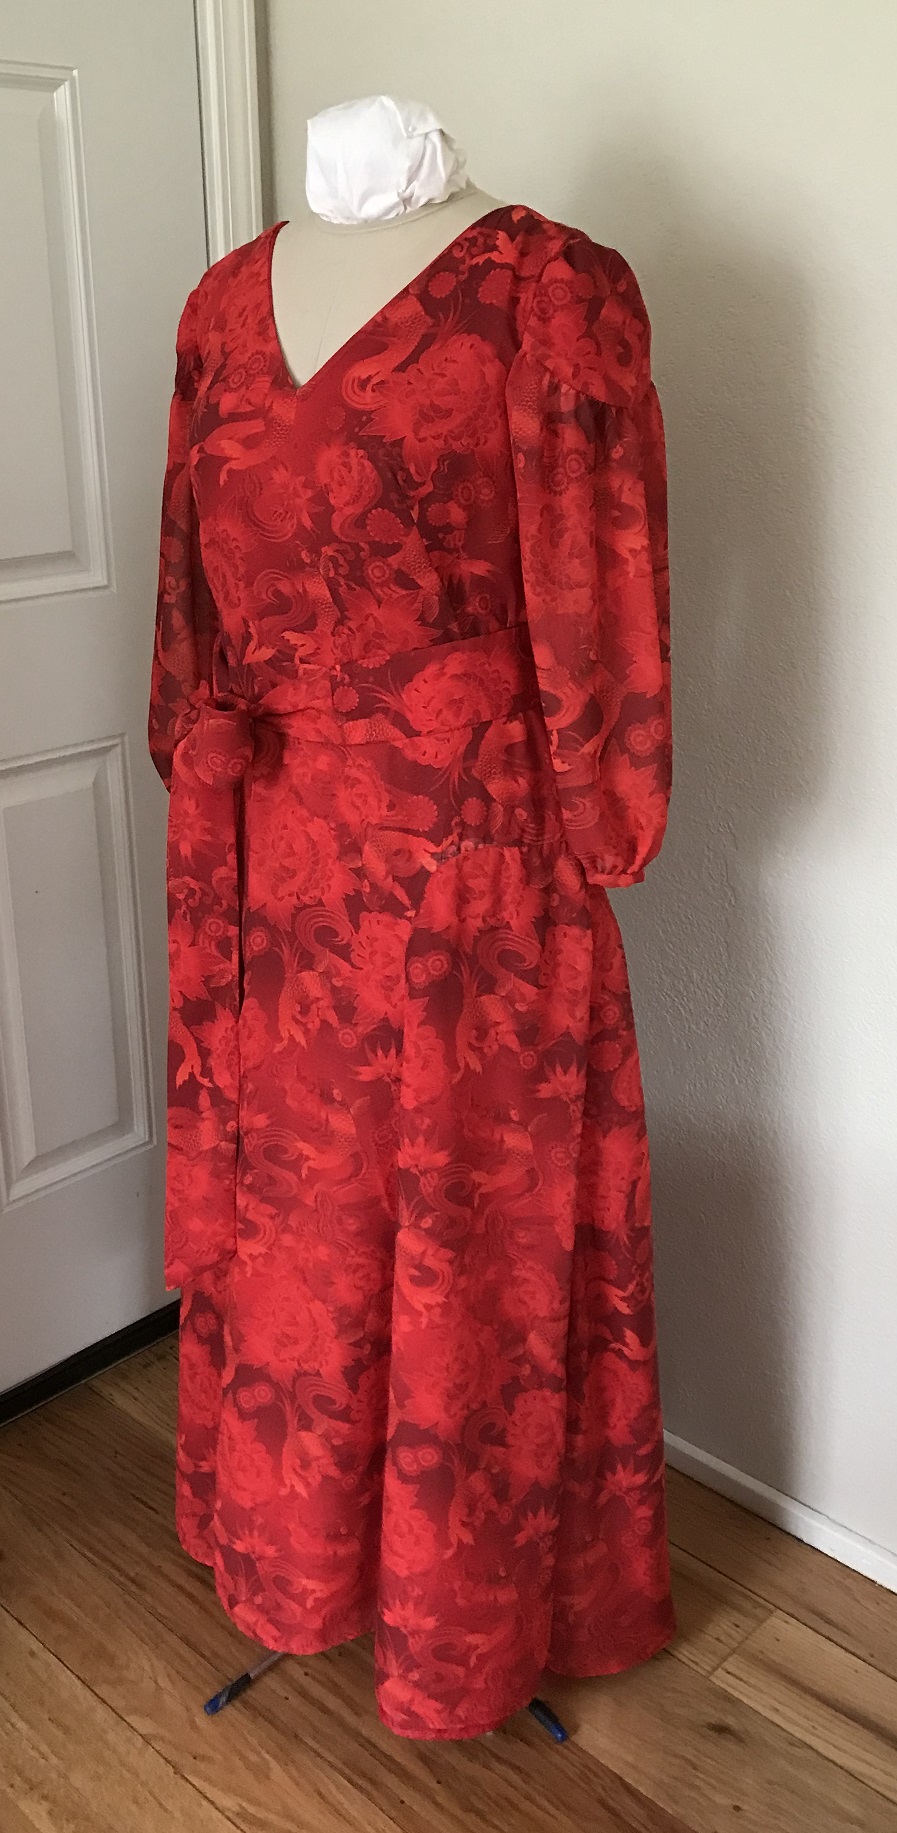 1927 Reproduction Red Koi Dress Quarter View.